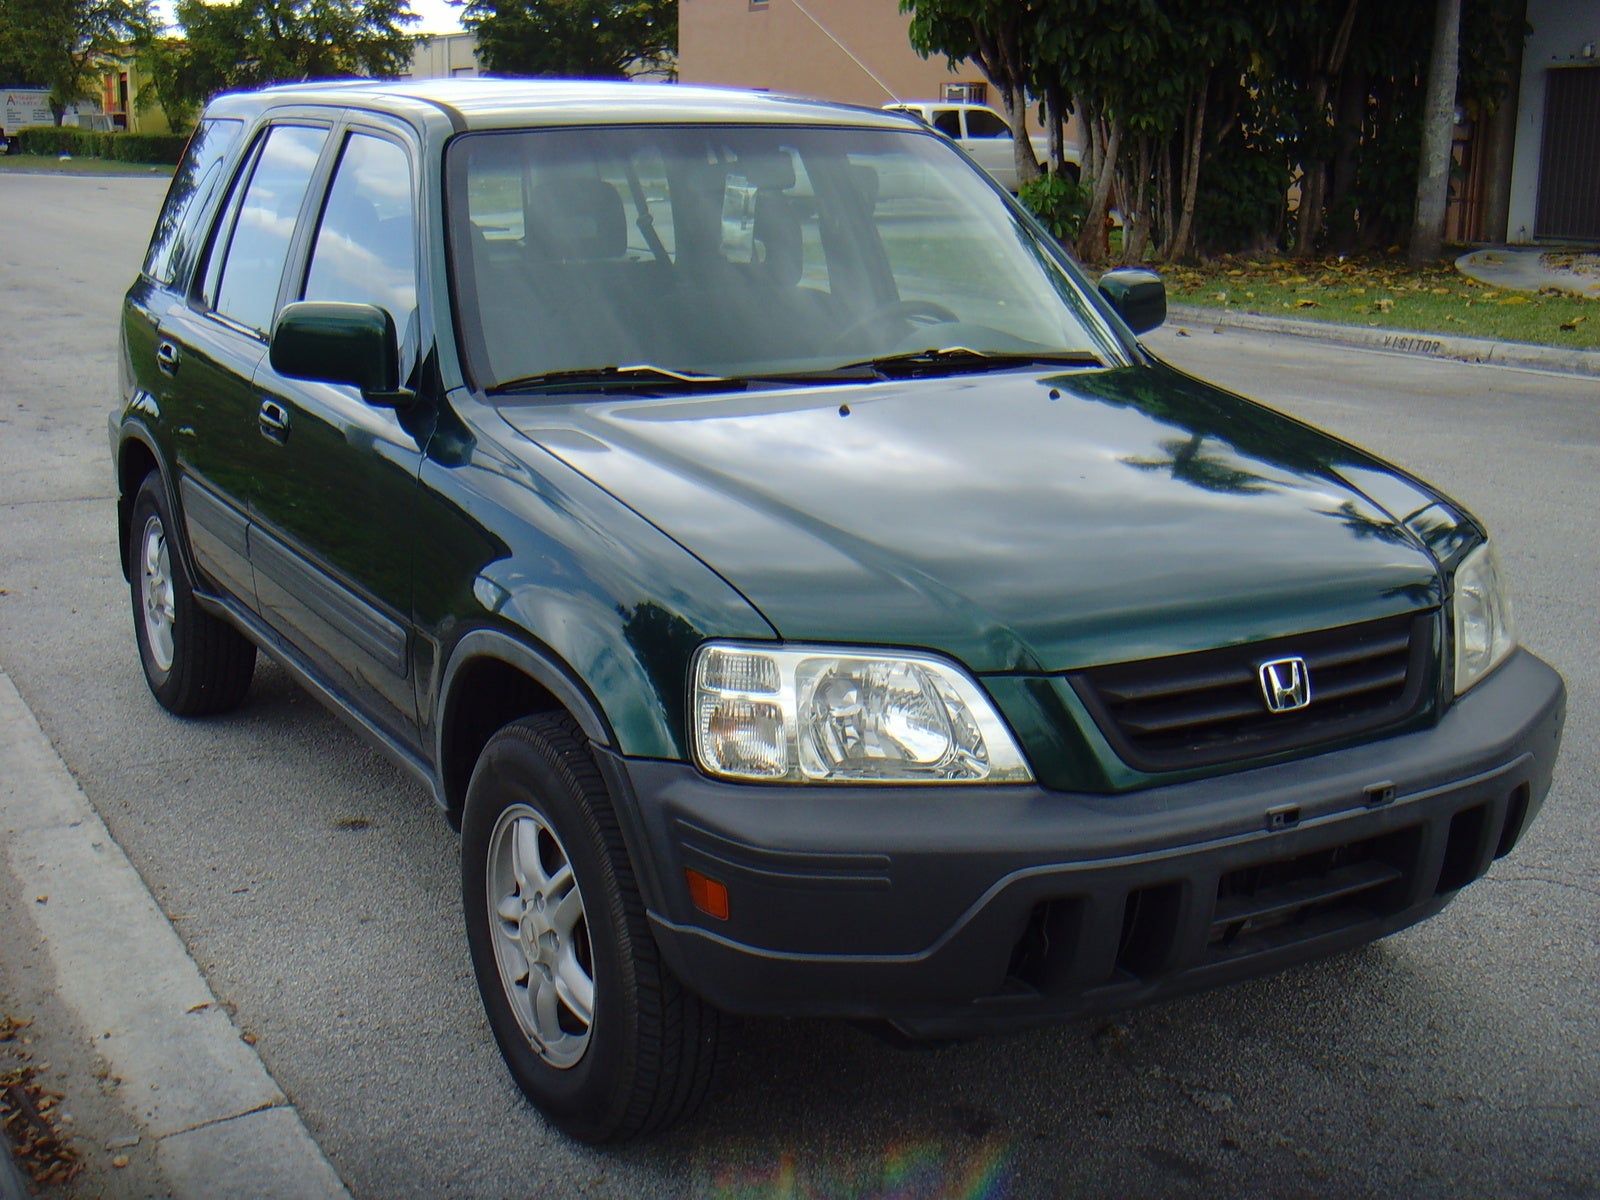 Хонда црв 2000 года. Honda CRV 2000. Хонда CRV 2000г. Хонда ЦРВ 2000г. 2000, Honda CRV, данные.